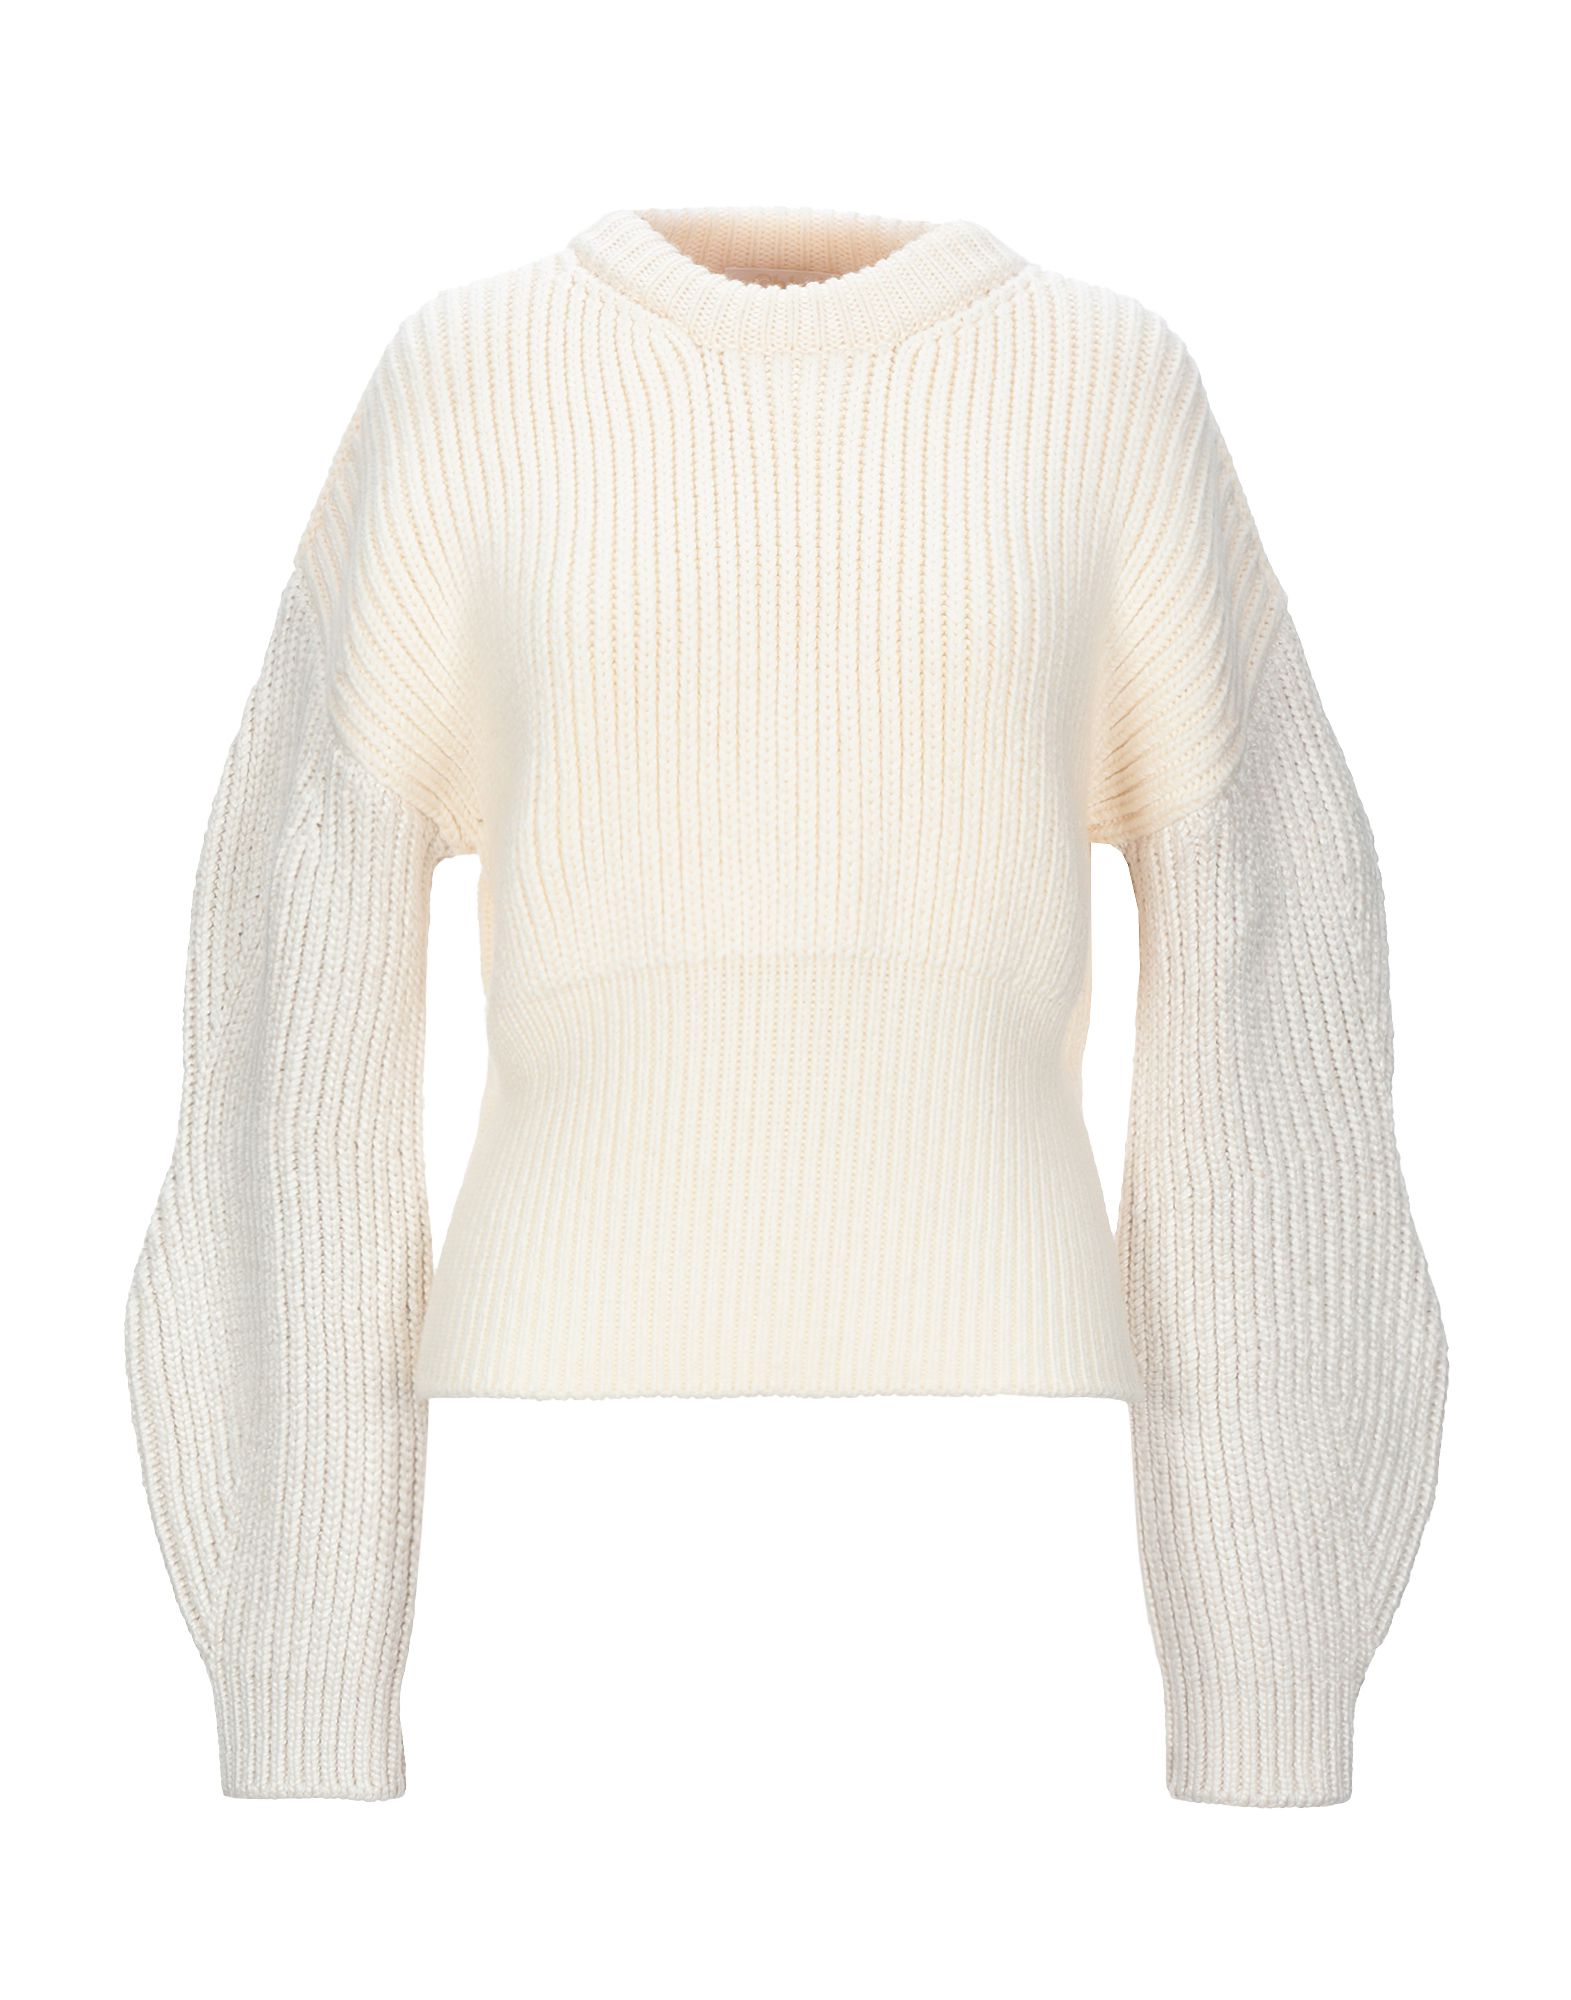 CHLOÉ Sweaters - Item 14000928